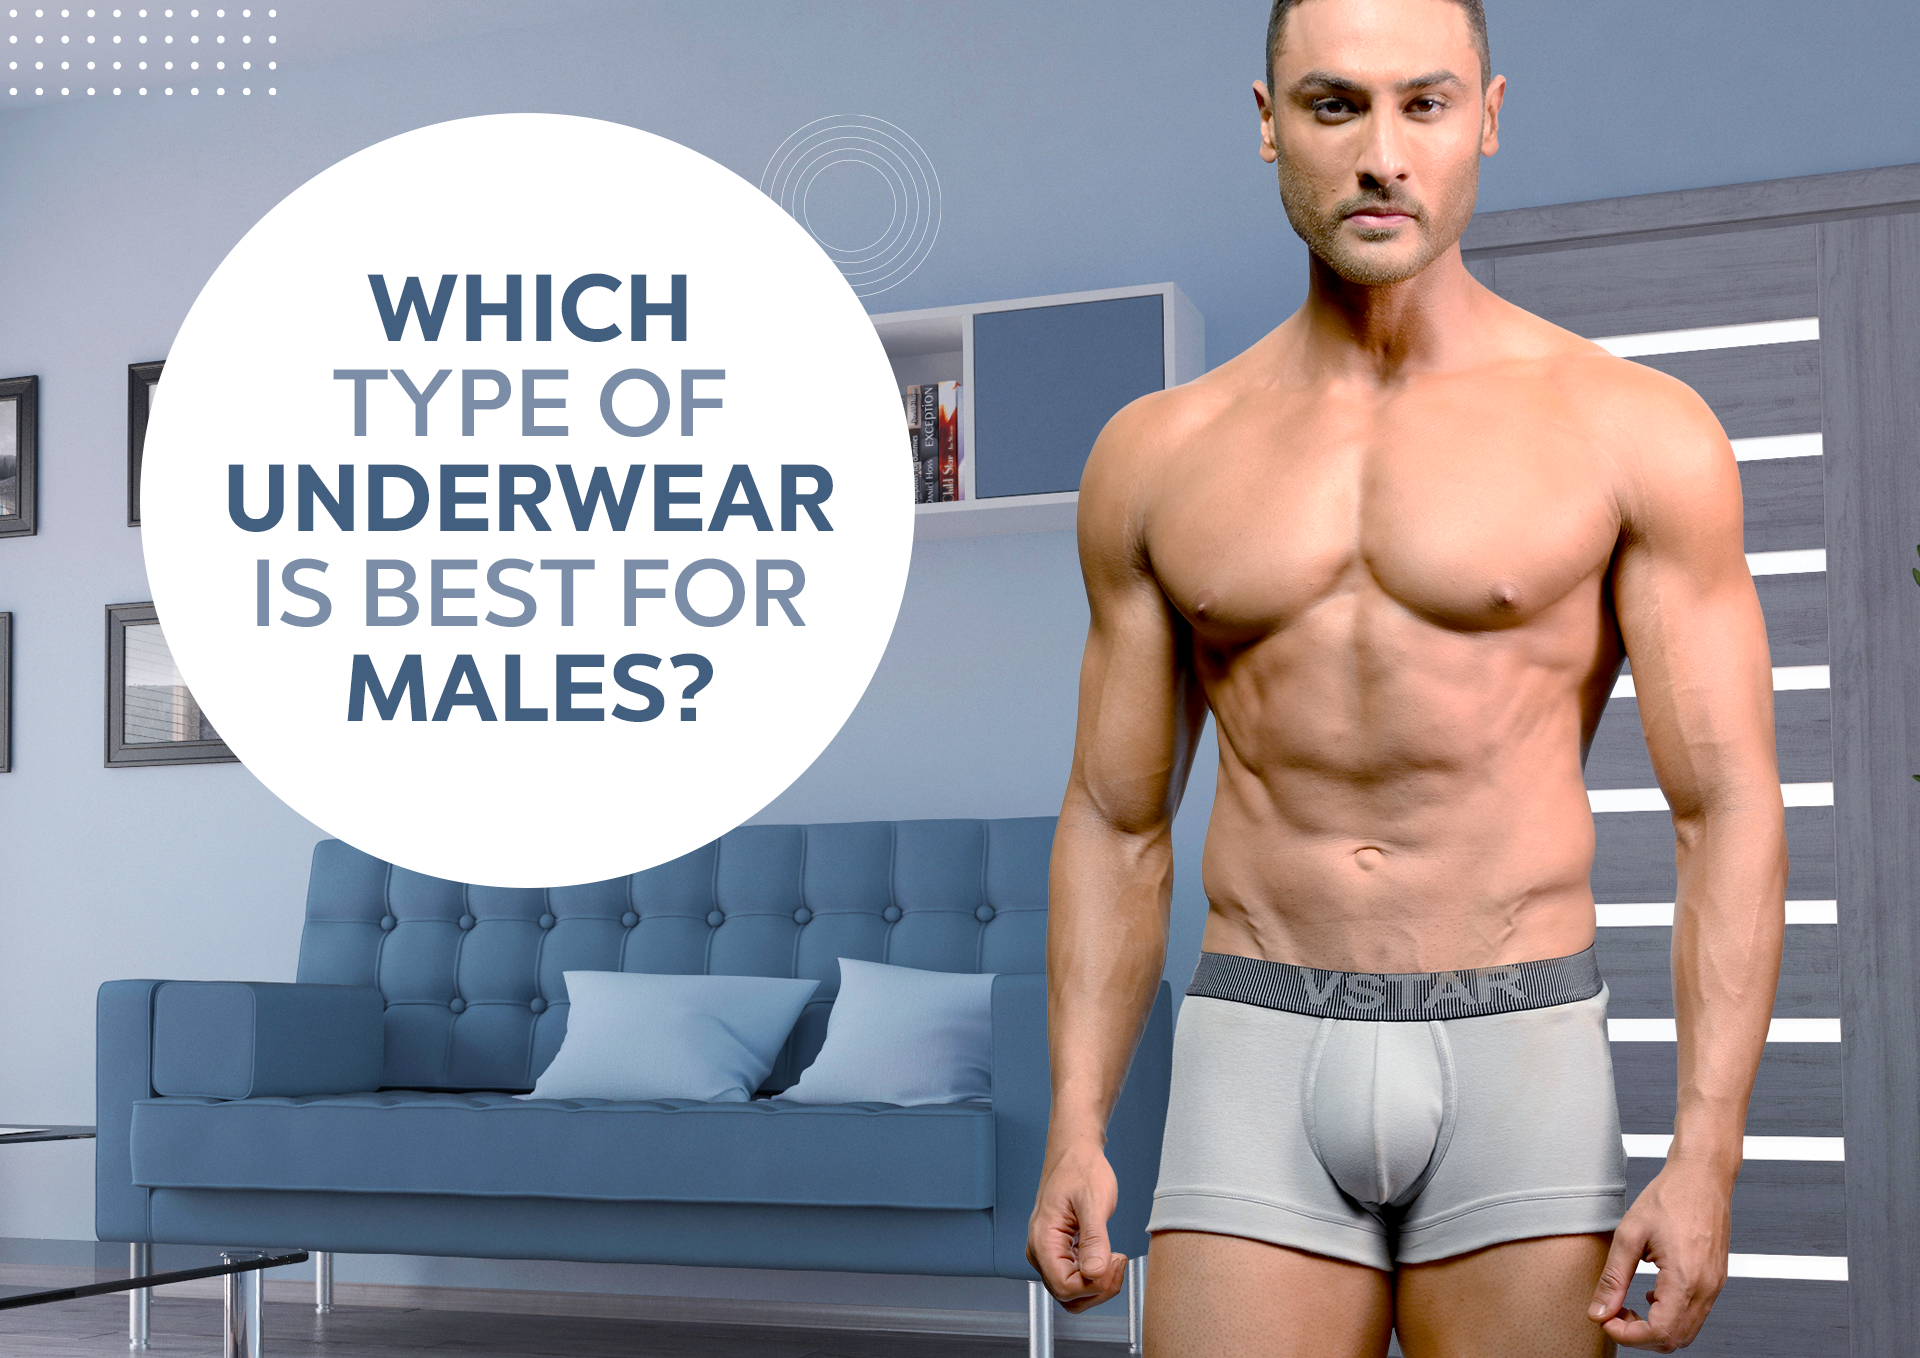 Buy Innerwear For Men Online, Shop for Men's Briefs, Vests, Boxers & More